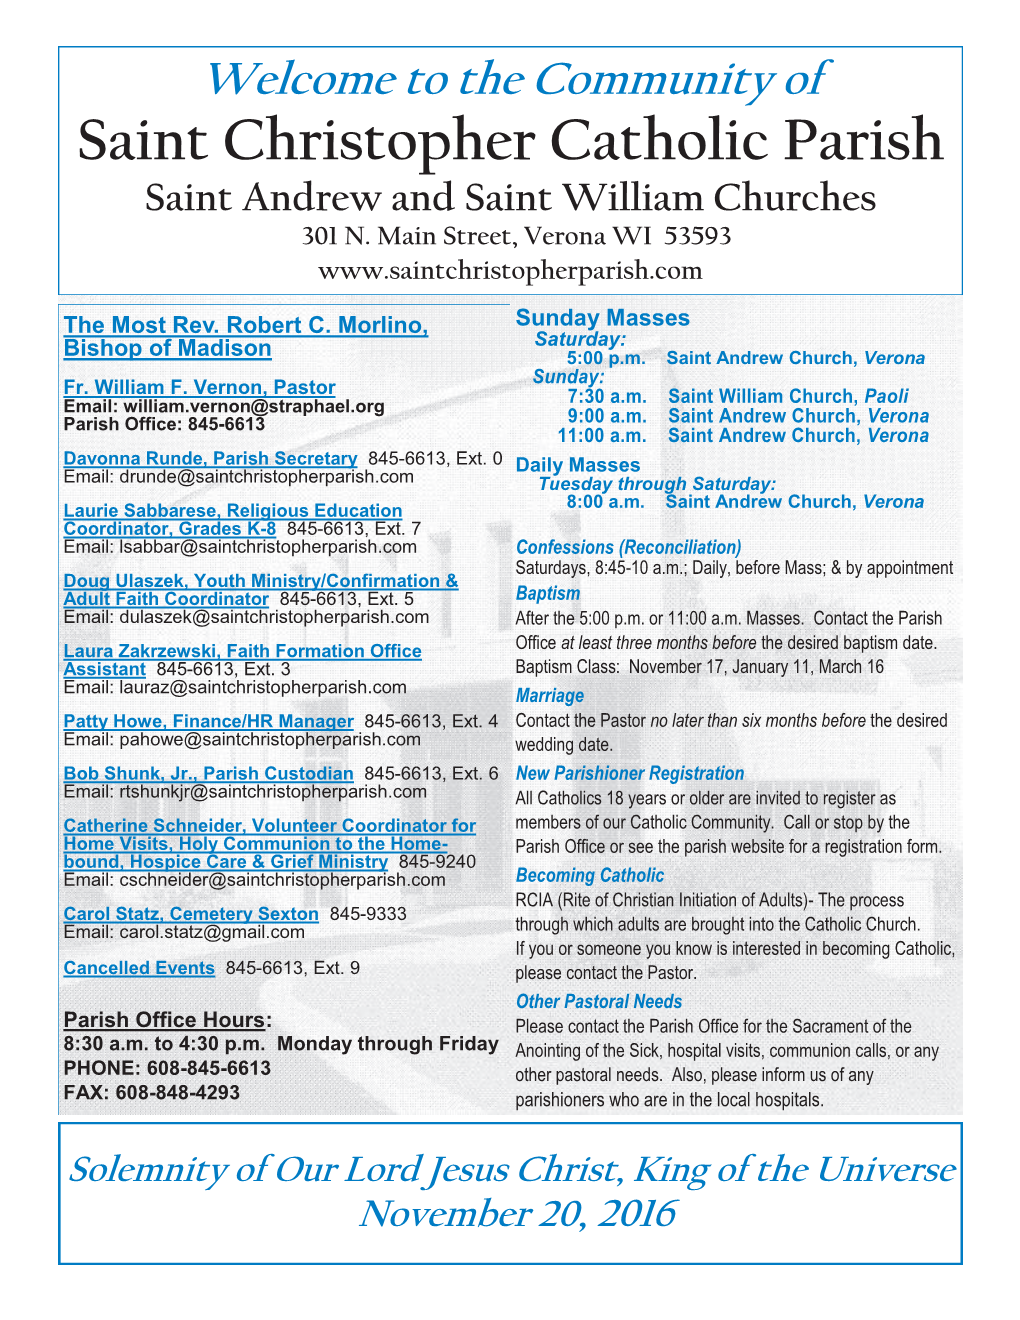 The Community of Saint Christopher Catholic Parish Saint Andrew and Saint William Churches 301 N